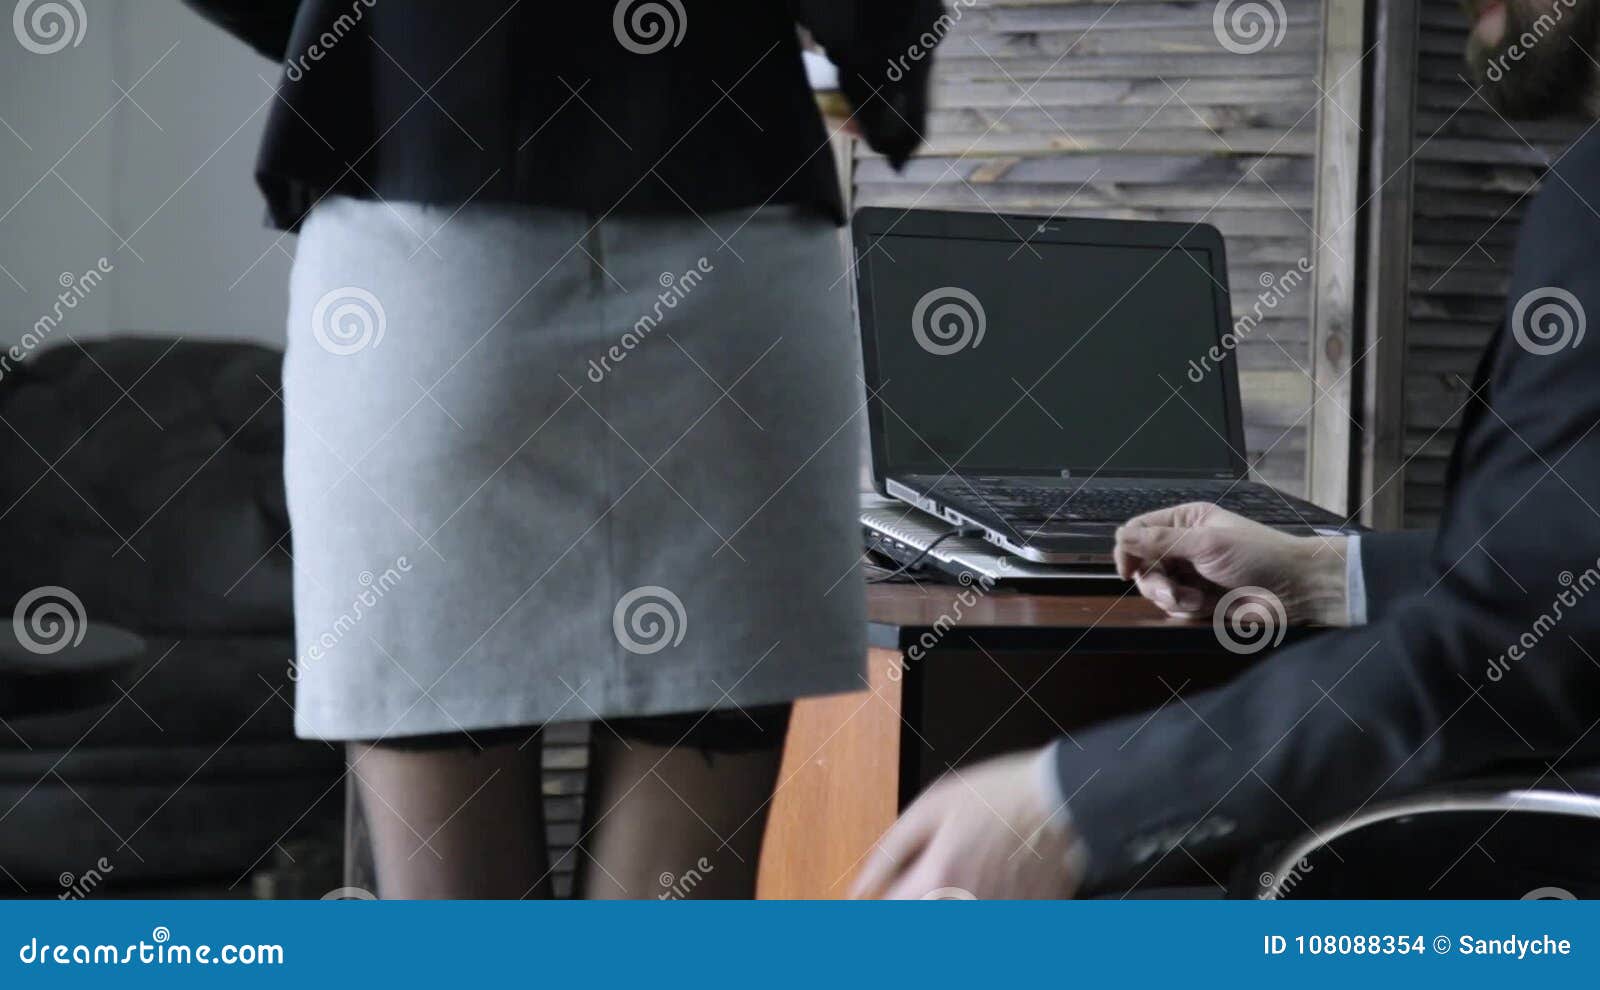 Secretary if harassed by sexy boss.